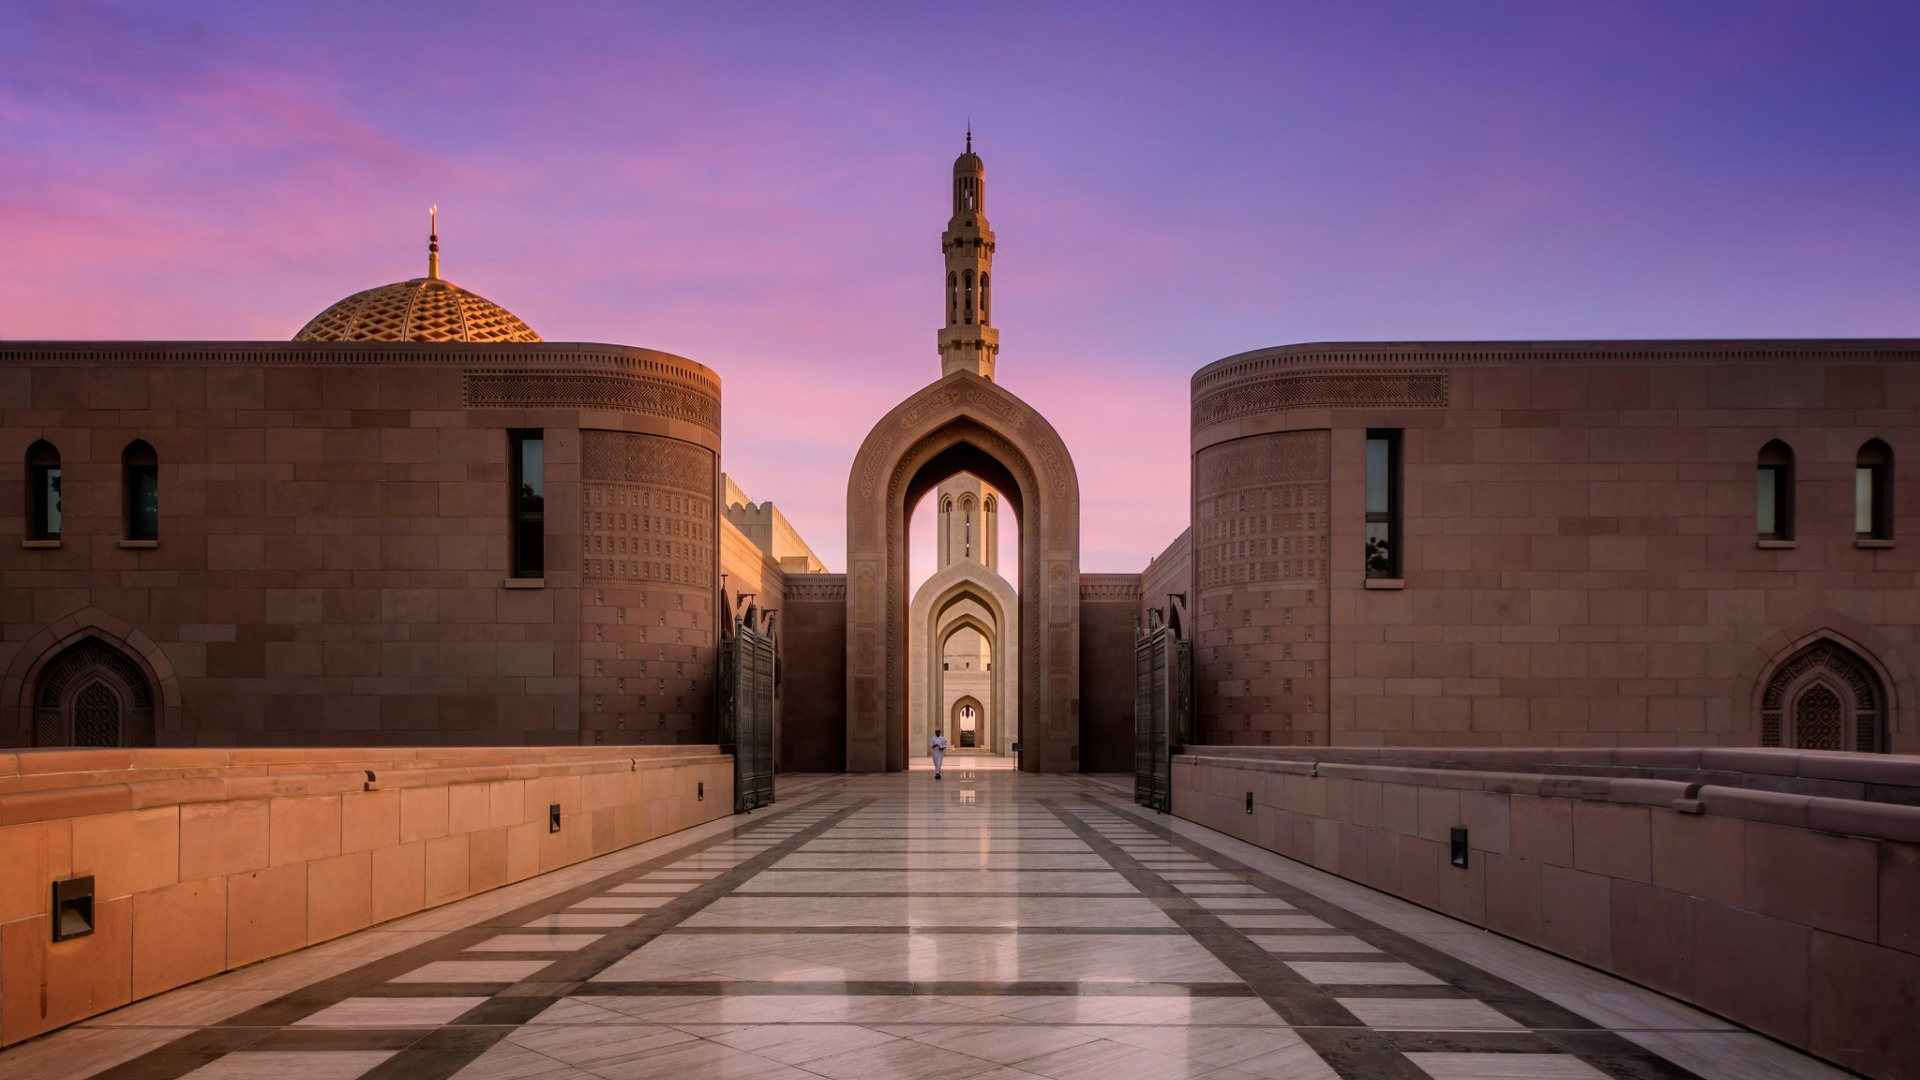 Oman: Sultan Qaboos Grand Mosque, The Musandam Peninsula. 1920x1080 Full HD Wallpaper.